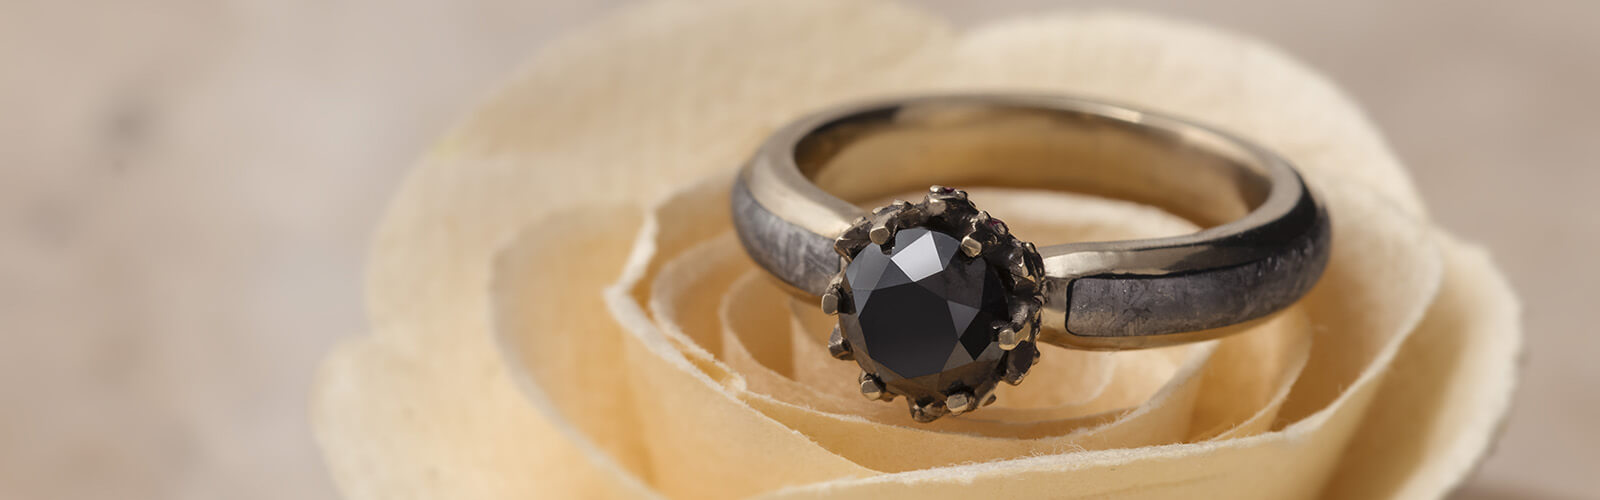 Black Diamond and Meteorite Engagement Ring